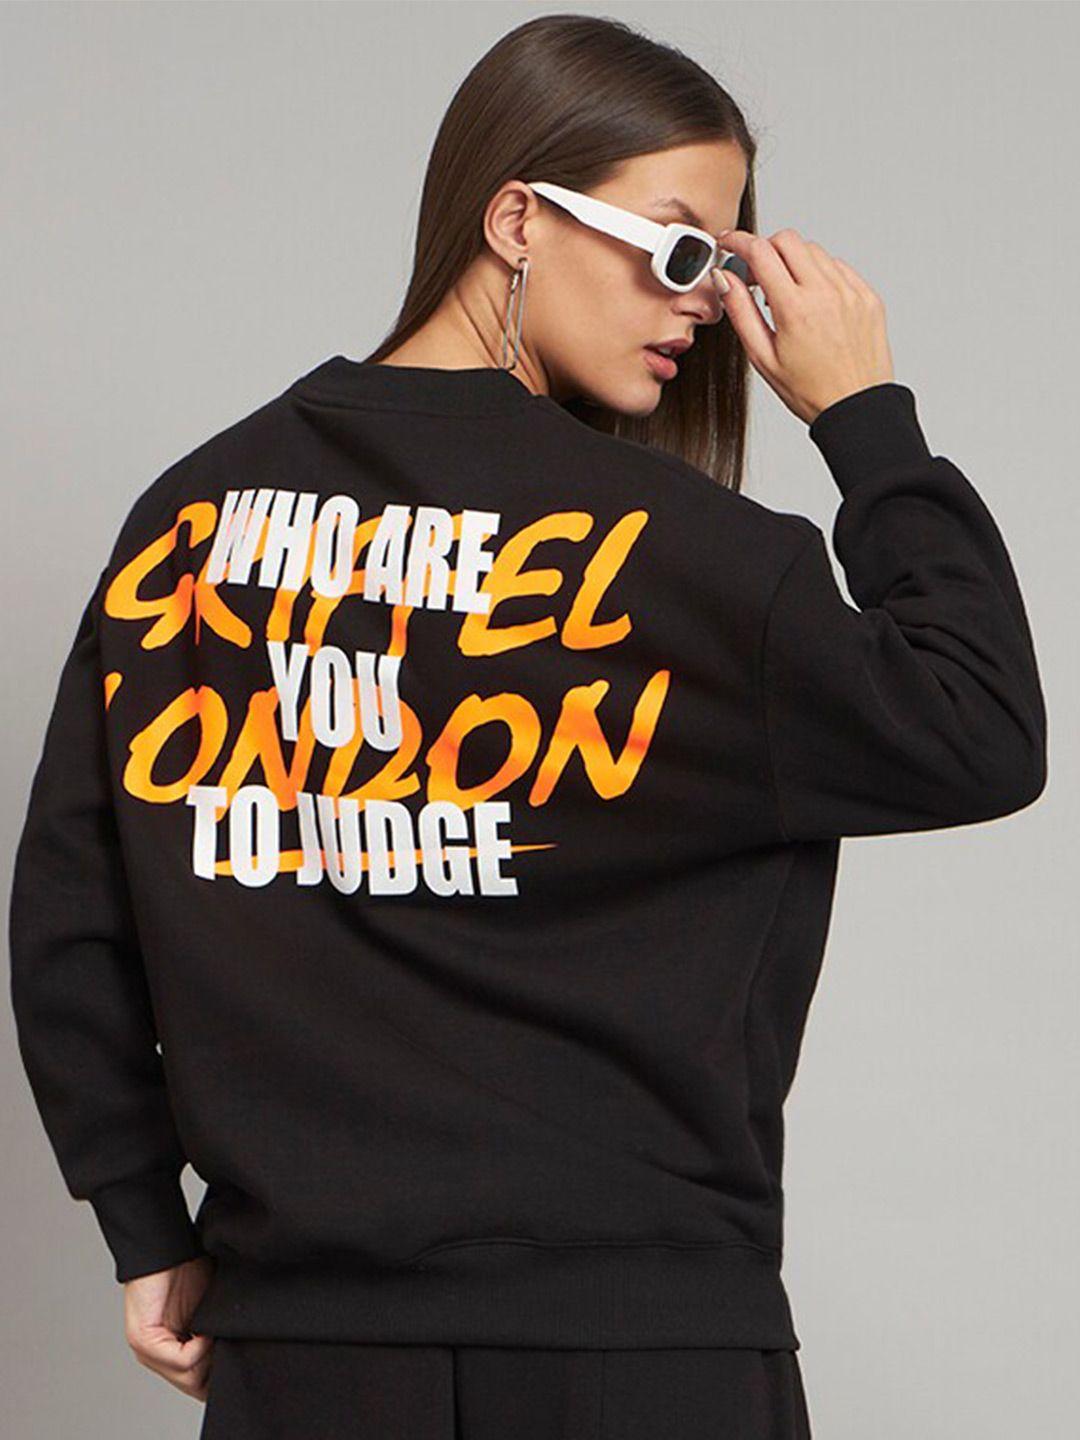 griffel typographic printed fleece sweatshirt